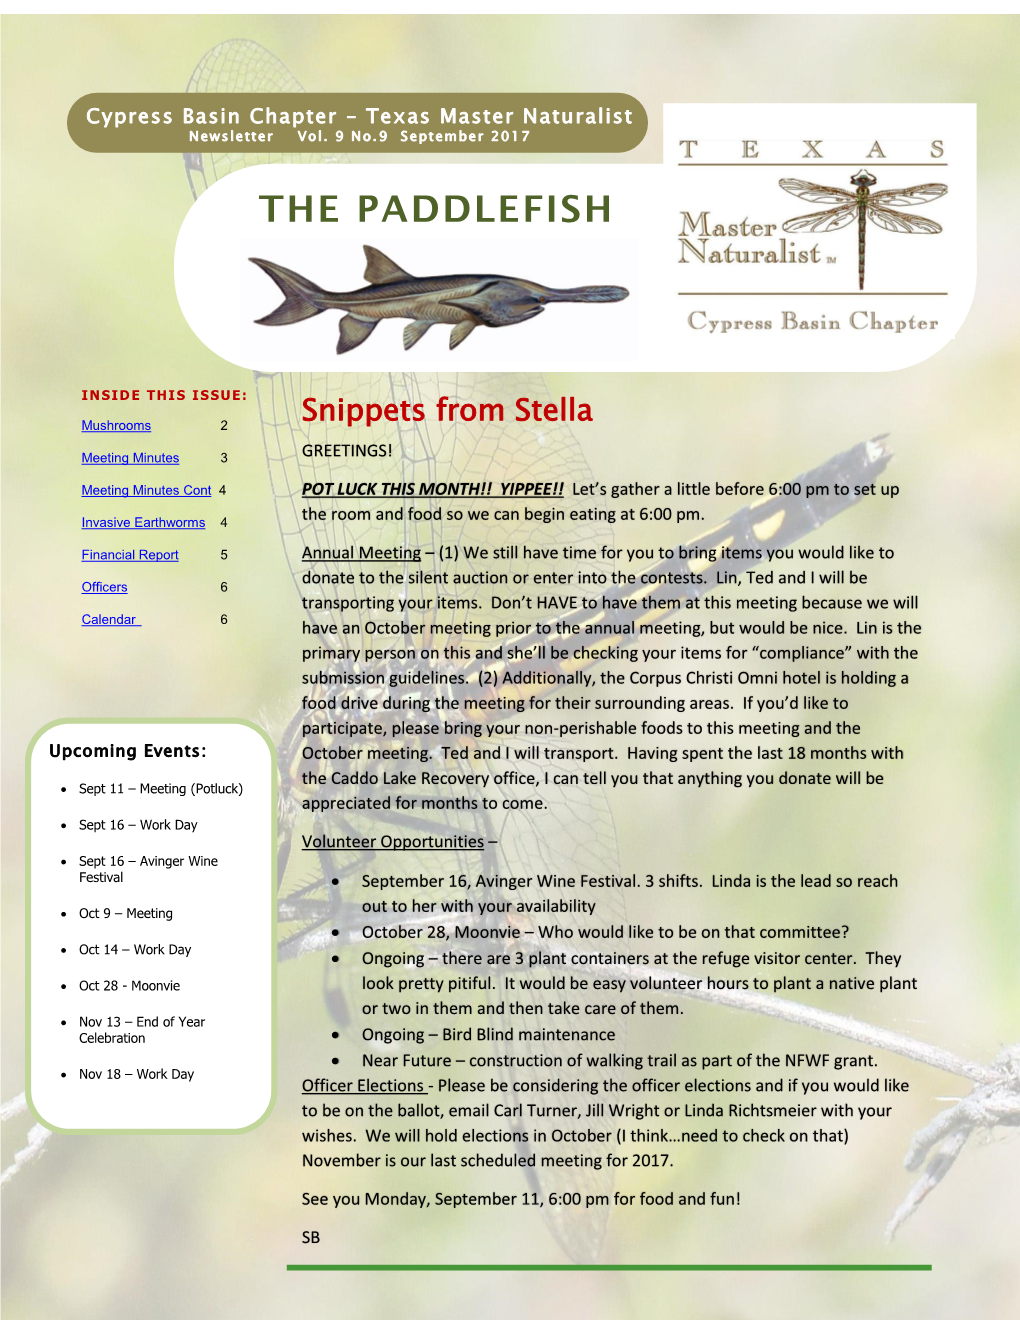 The Paddlefish